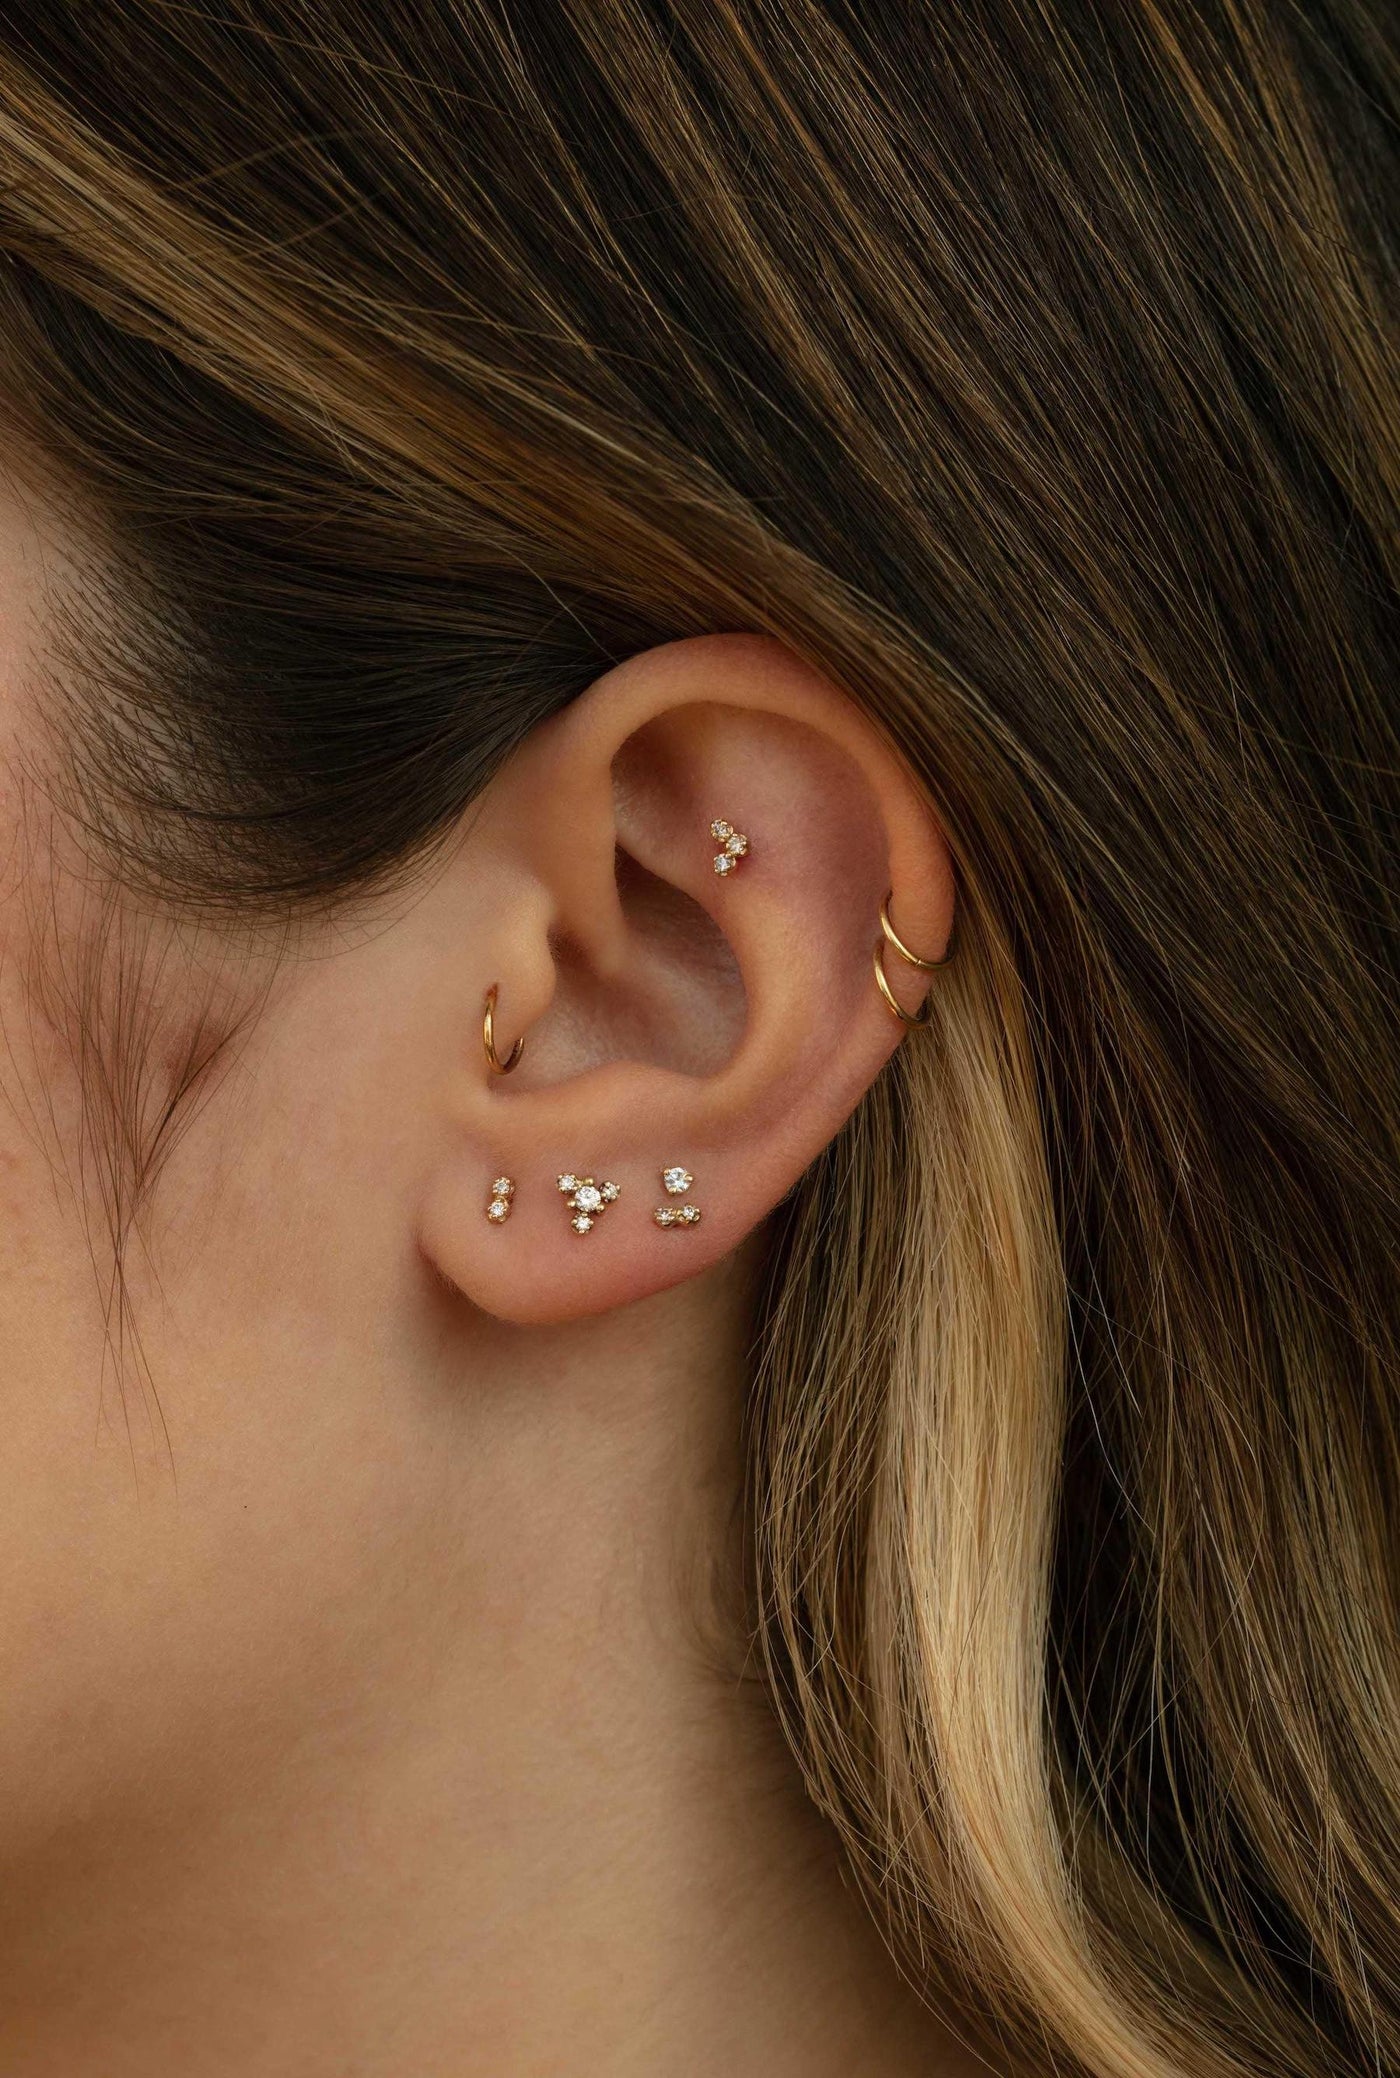 Buy 3 Pairs Sterling Silver Small Hoop Earrings | Cubic Zirconia Cuff  Earrings | 14K Gold Plated Hoop Earrings for Women | Cartilage Hoop Earrings  for Women Girls (10mm) at Amazon.in